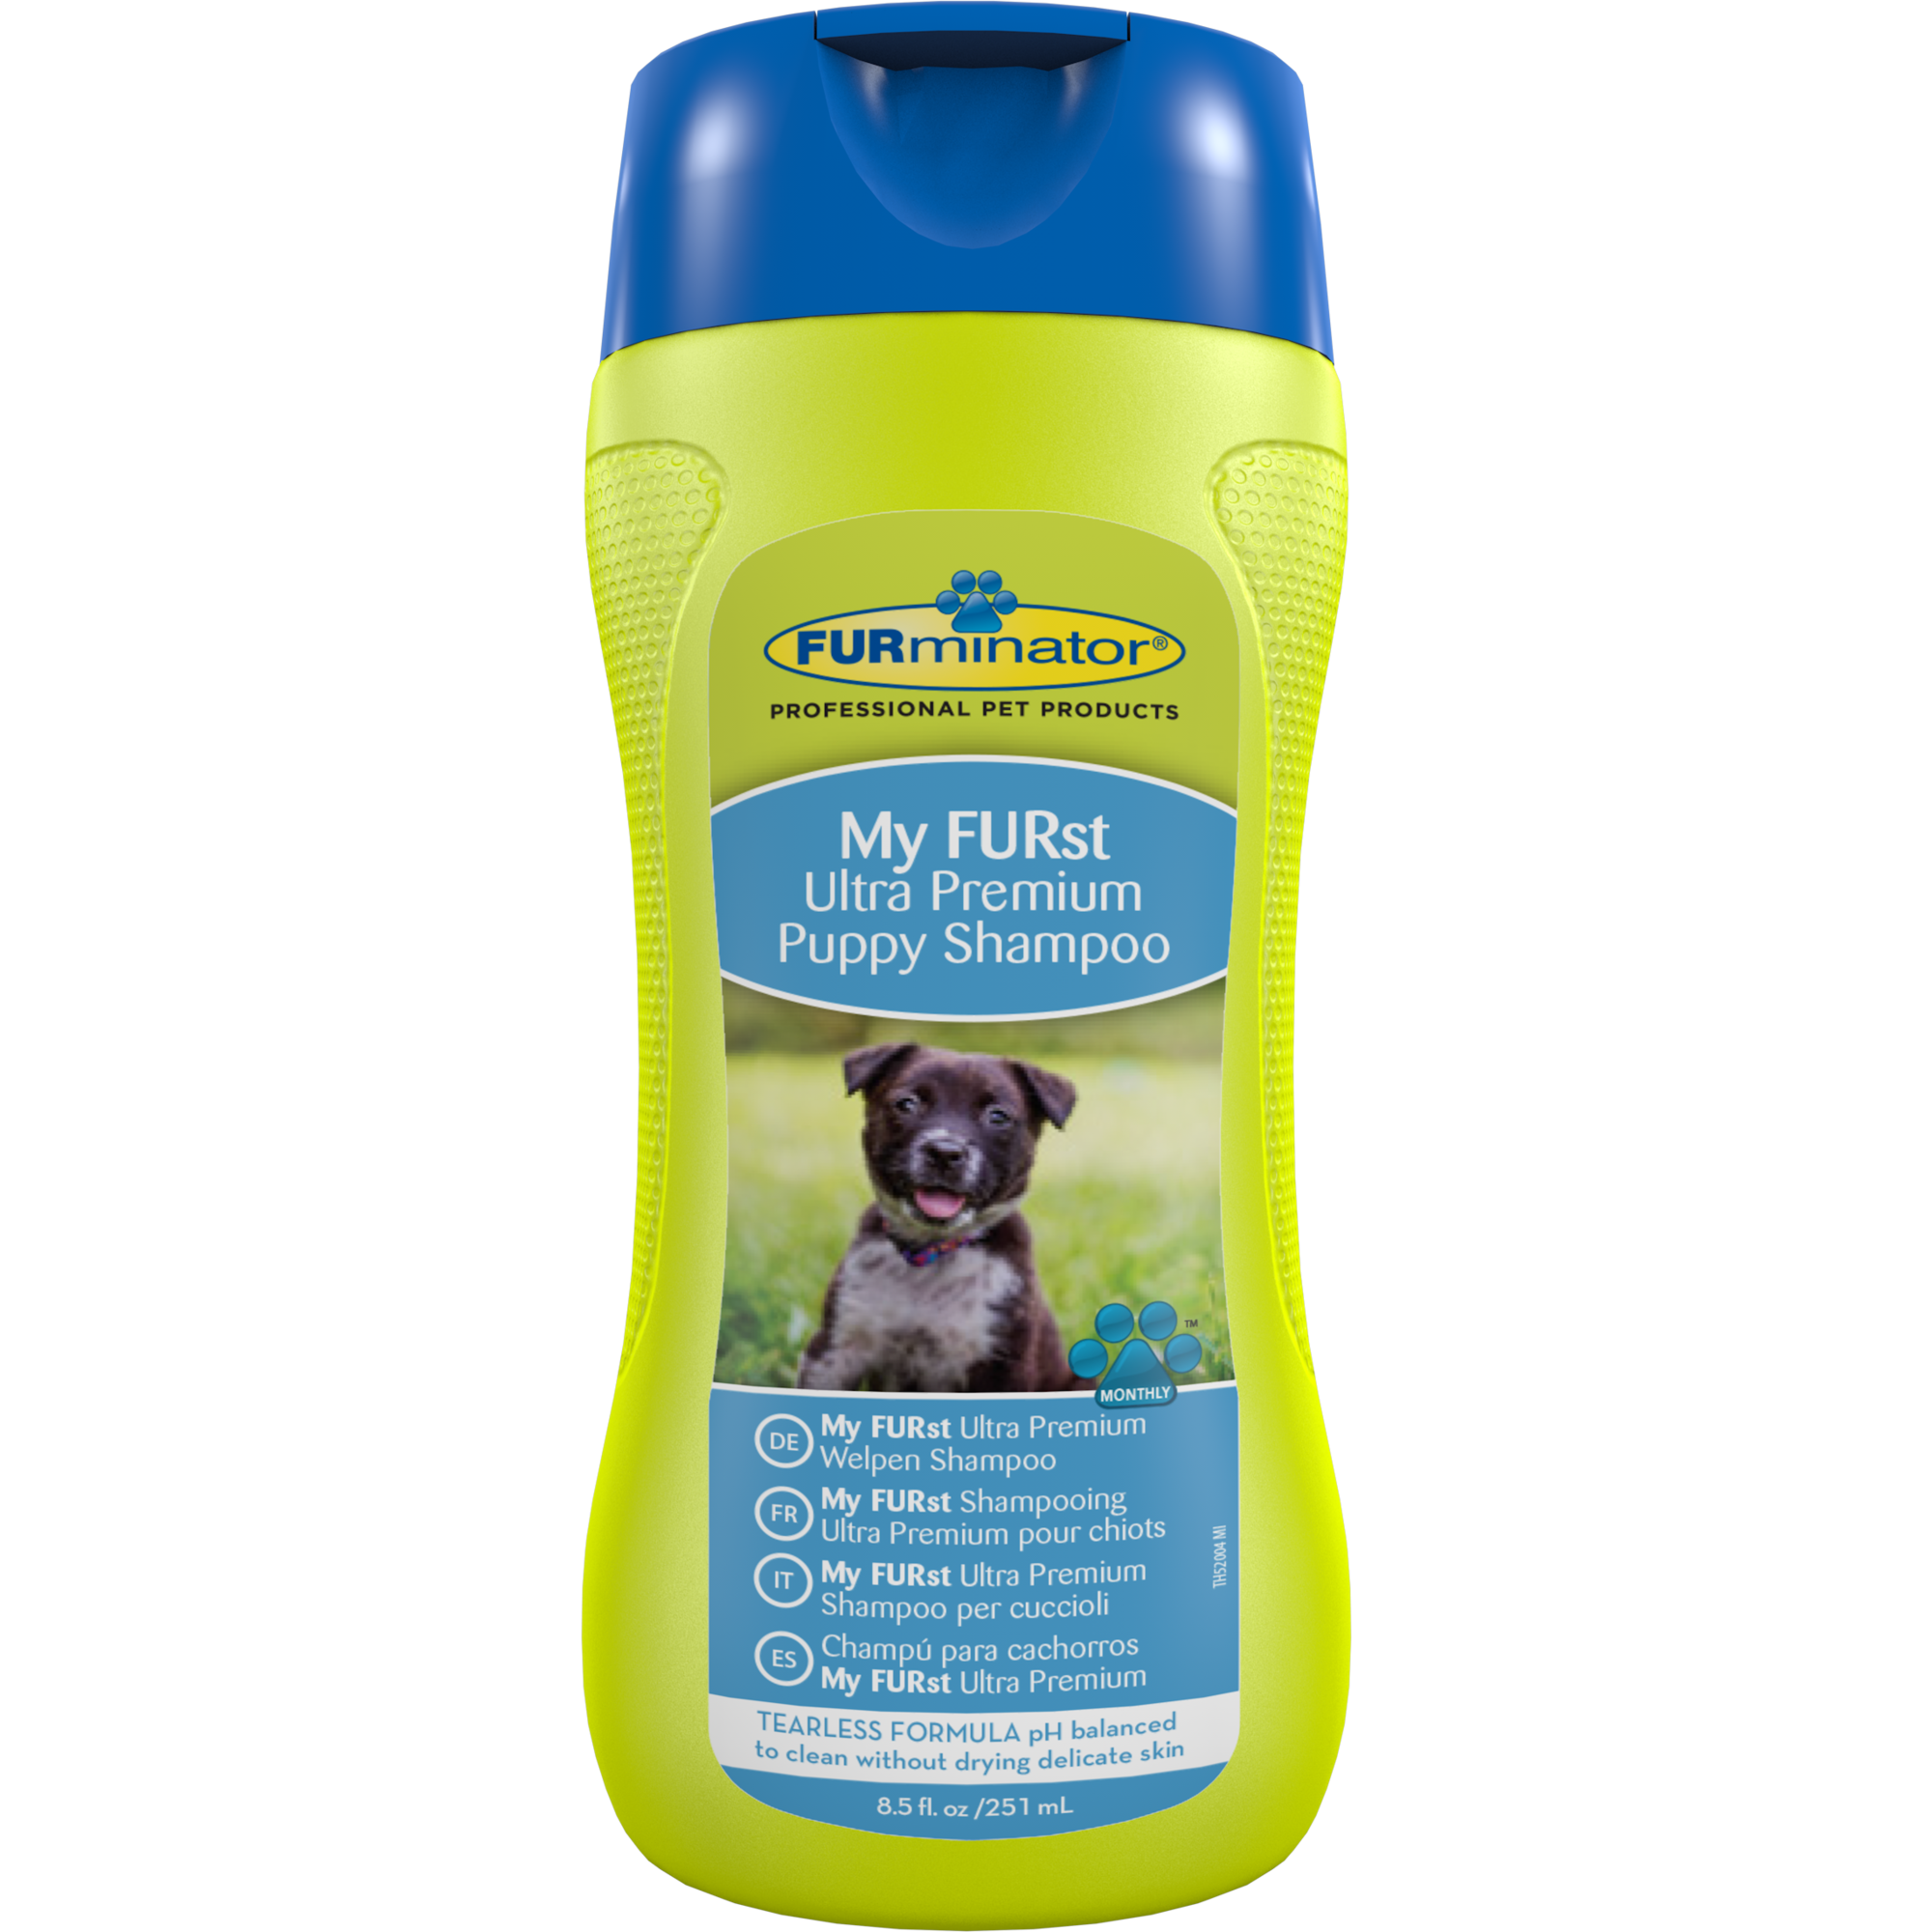 Furminator My FURst Shampoo Puppies 251 ml + product picture